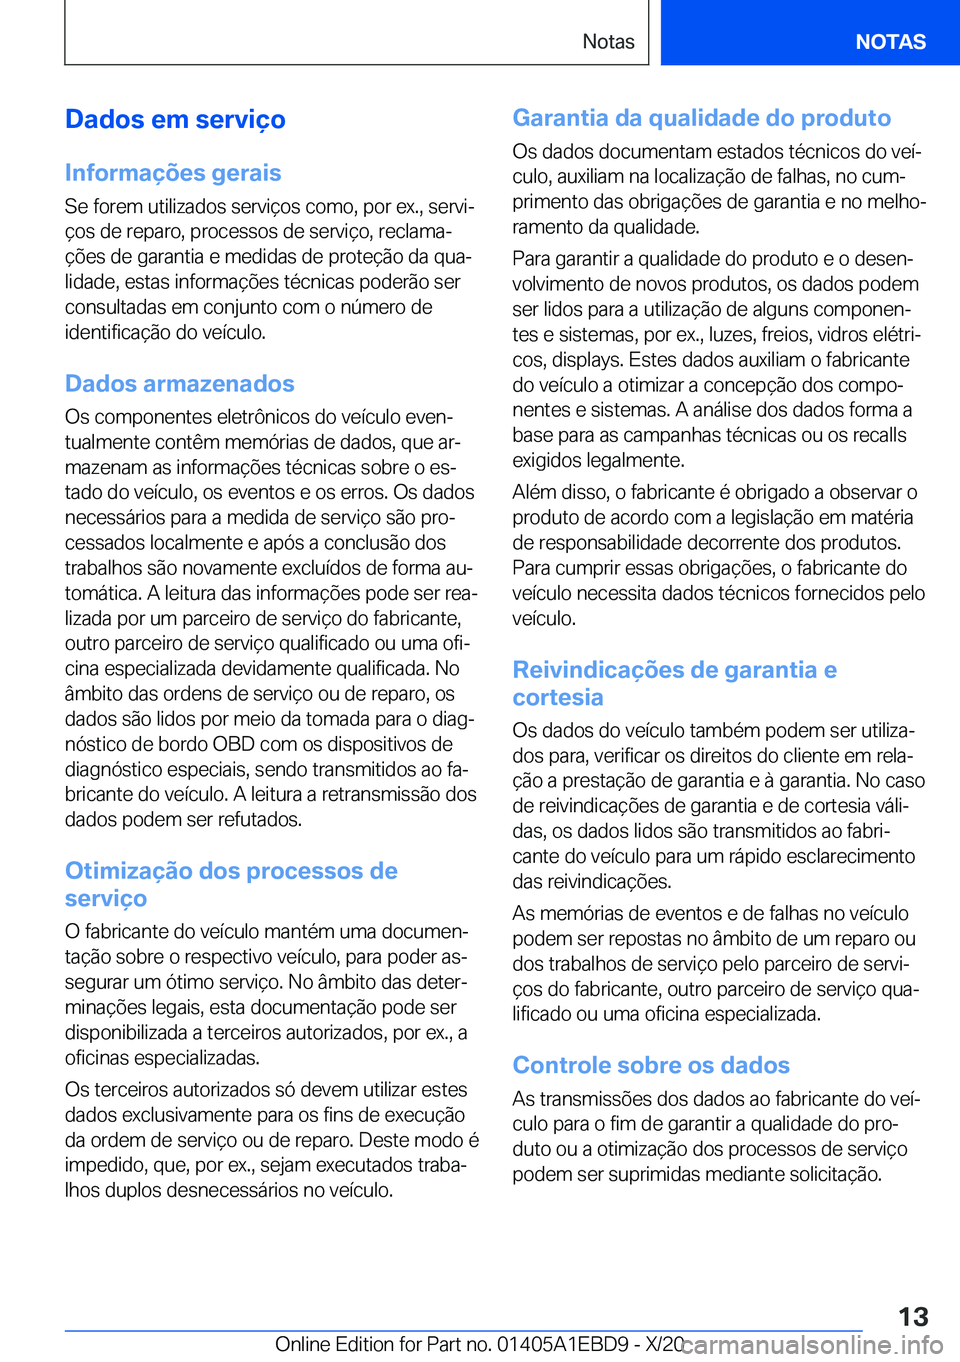 BMW 3 SERIES 2021  Manual do condutor (in Portuguese) �D�a�d�o�s��e�m��s�e�r�v�i�